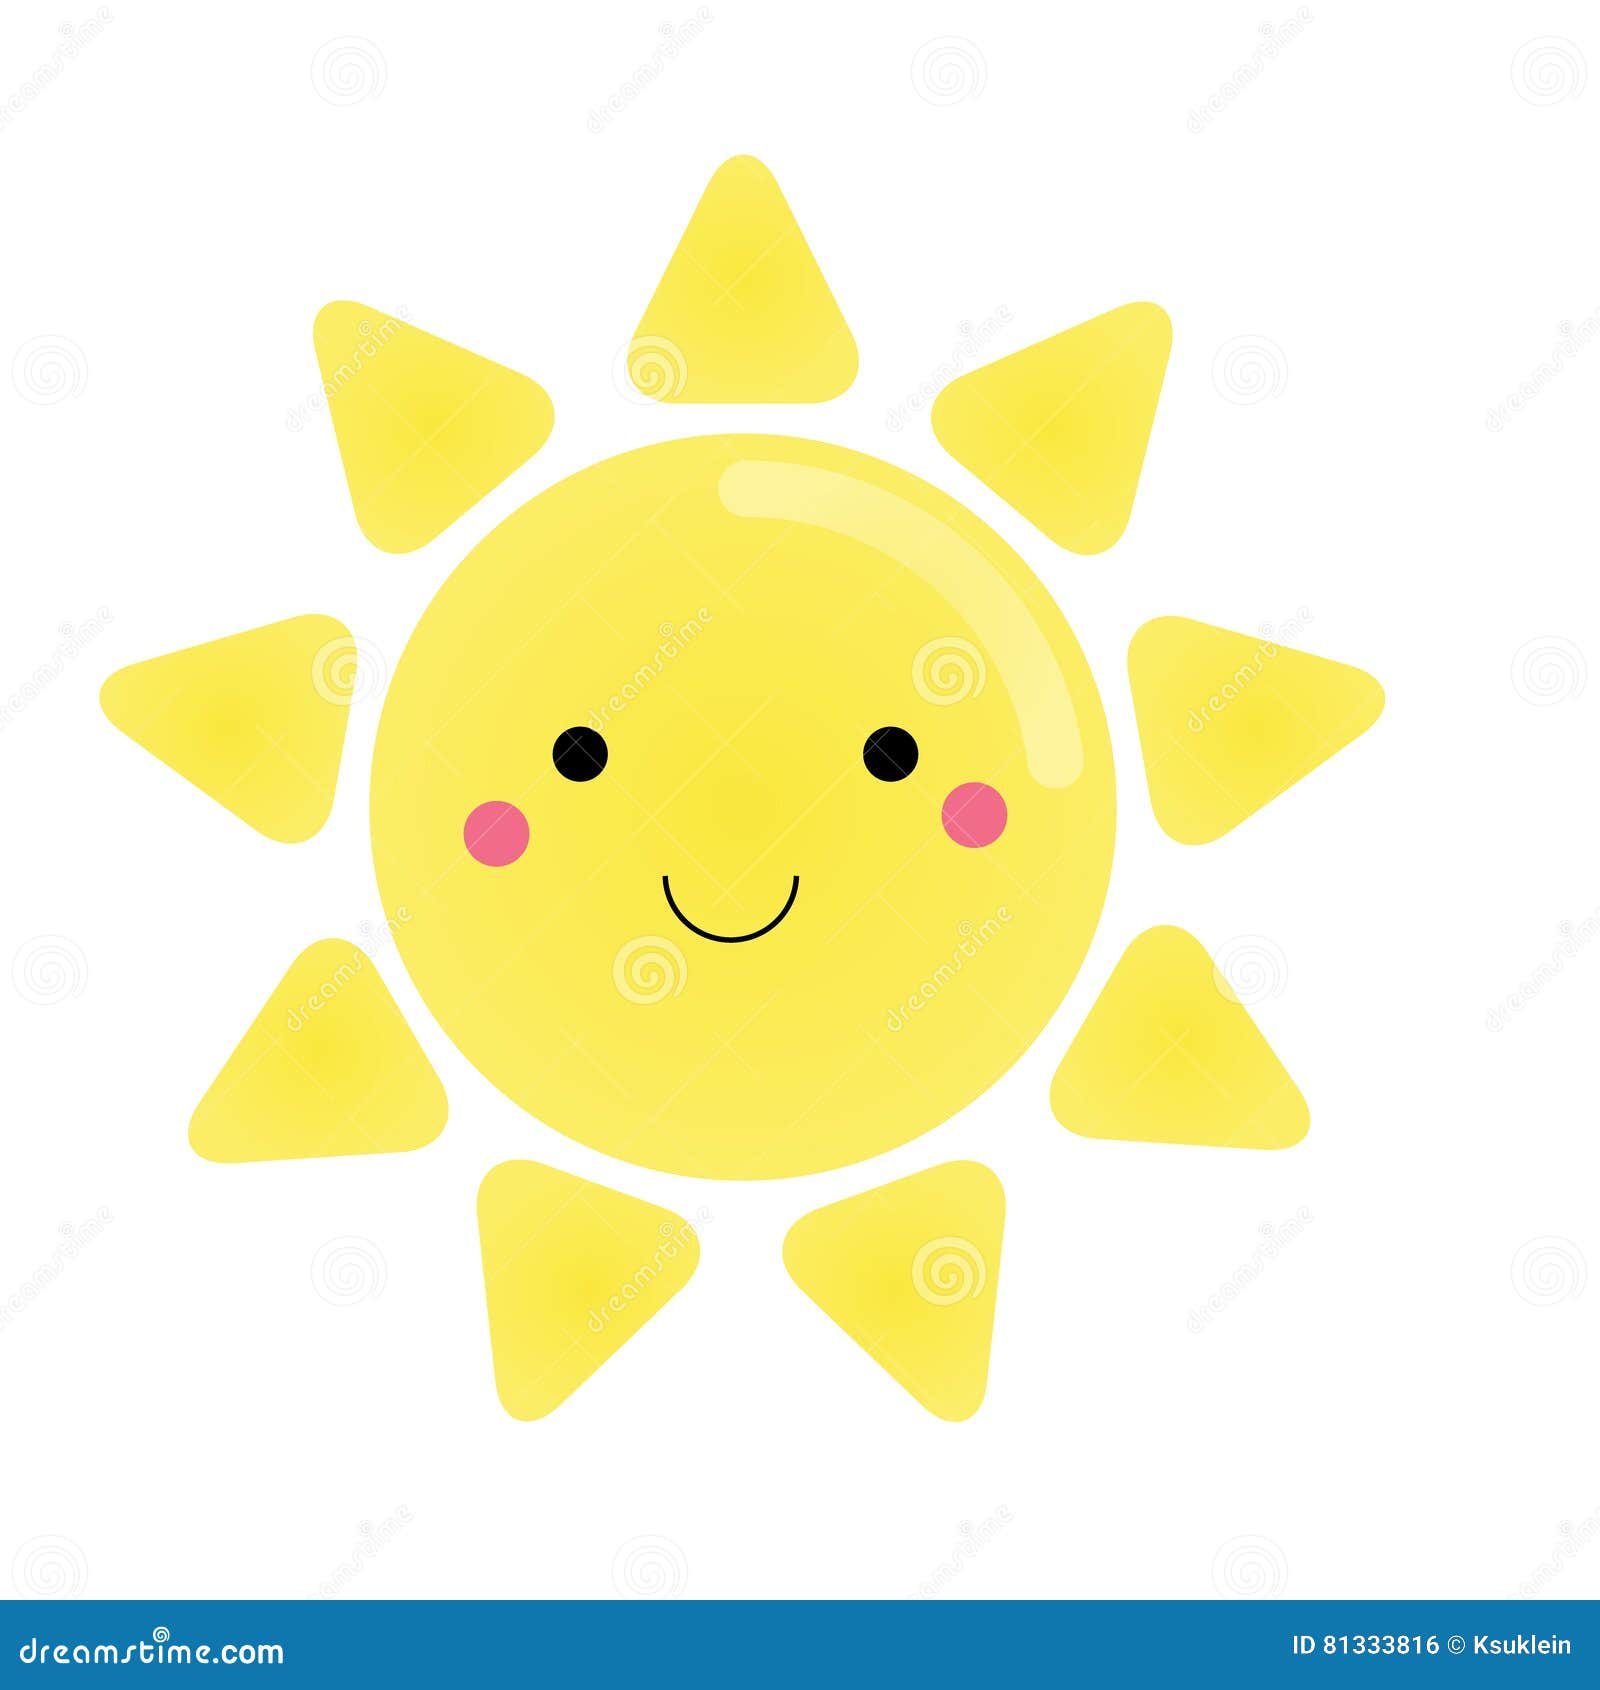 Cute Kawaii Sun Character Vector Illustration For Kids Design Element